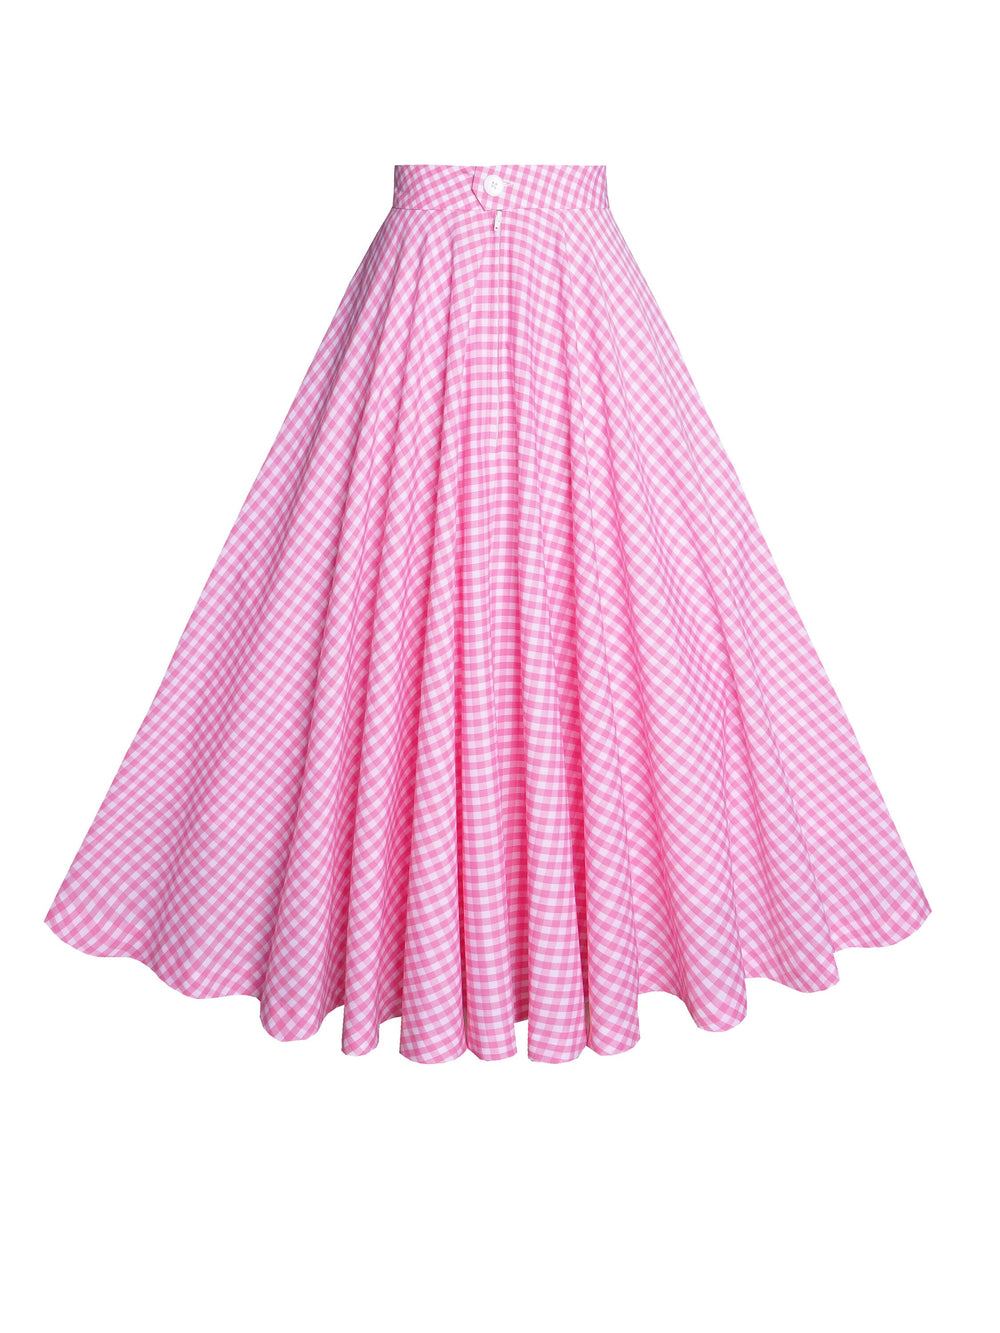 MTO - Lindy Skirt Pink Medium Gingham